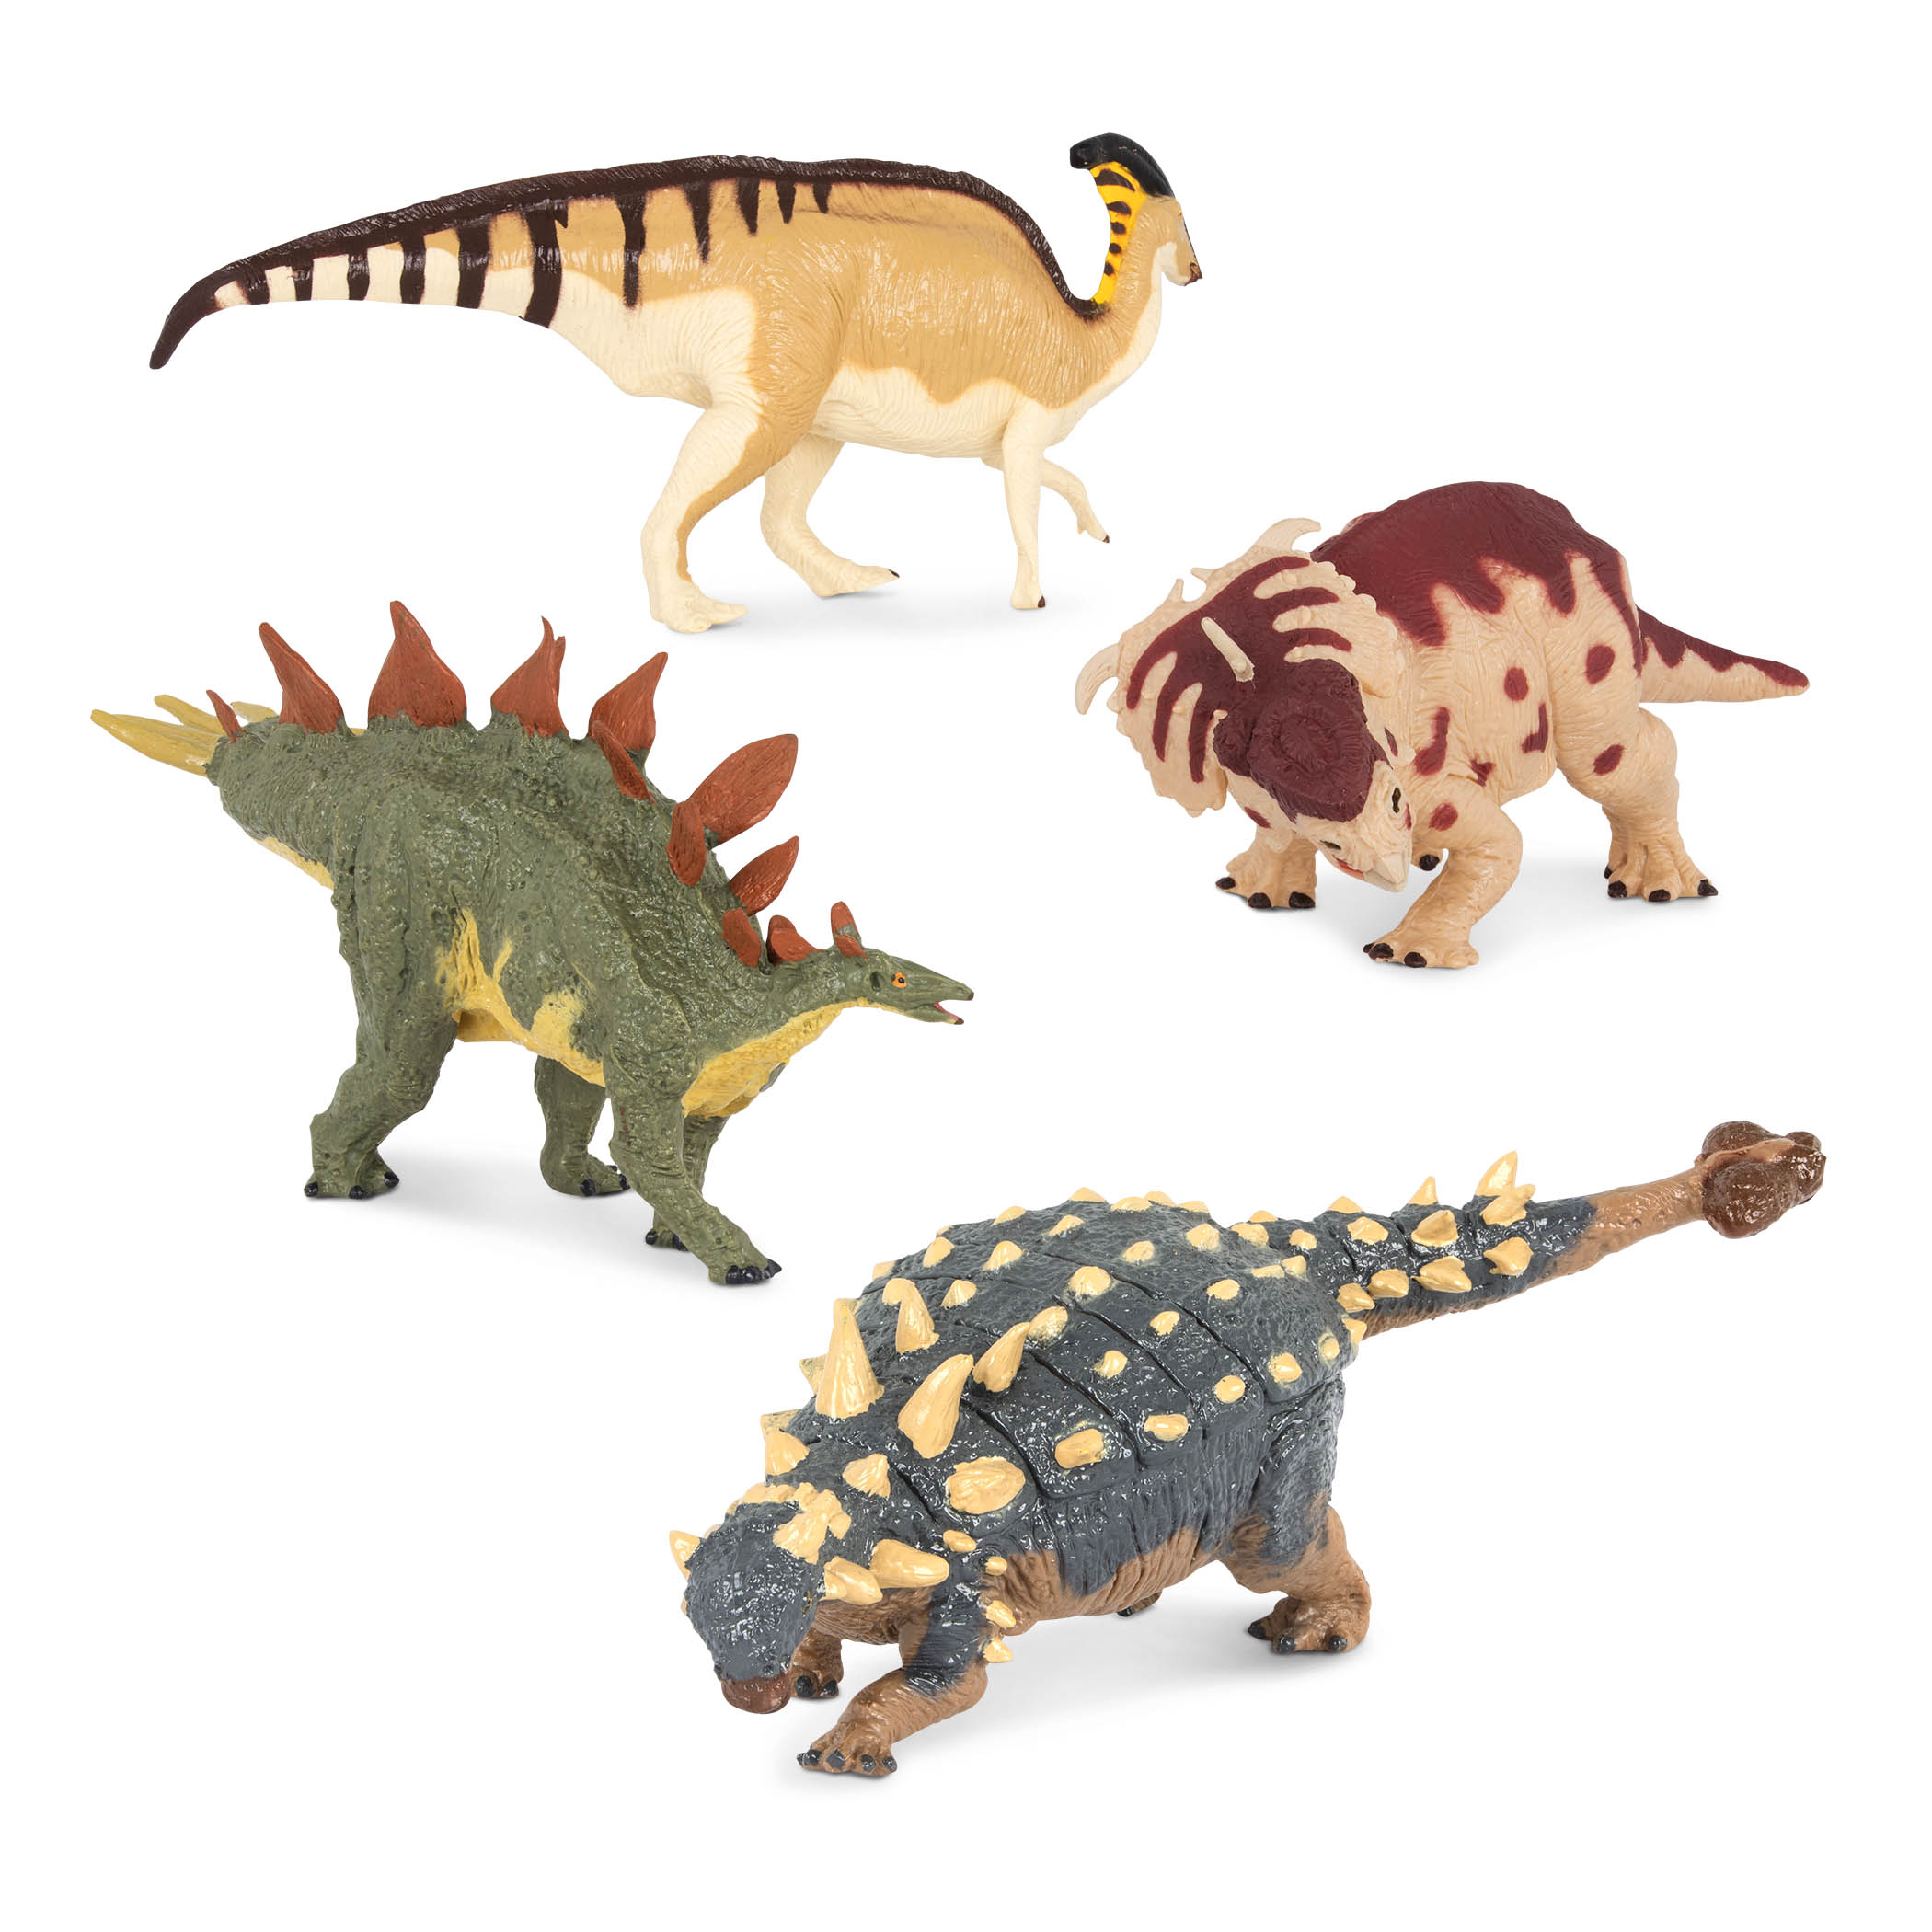 Dinosauri giocattolo Terra Pachirinosauro, Euoplocefalo, Stegosauro...